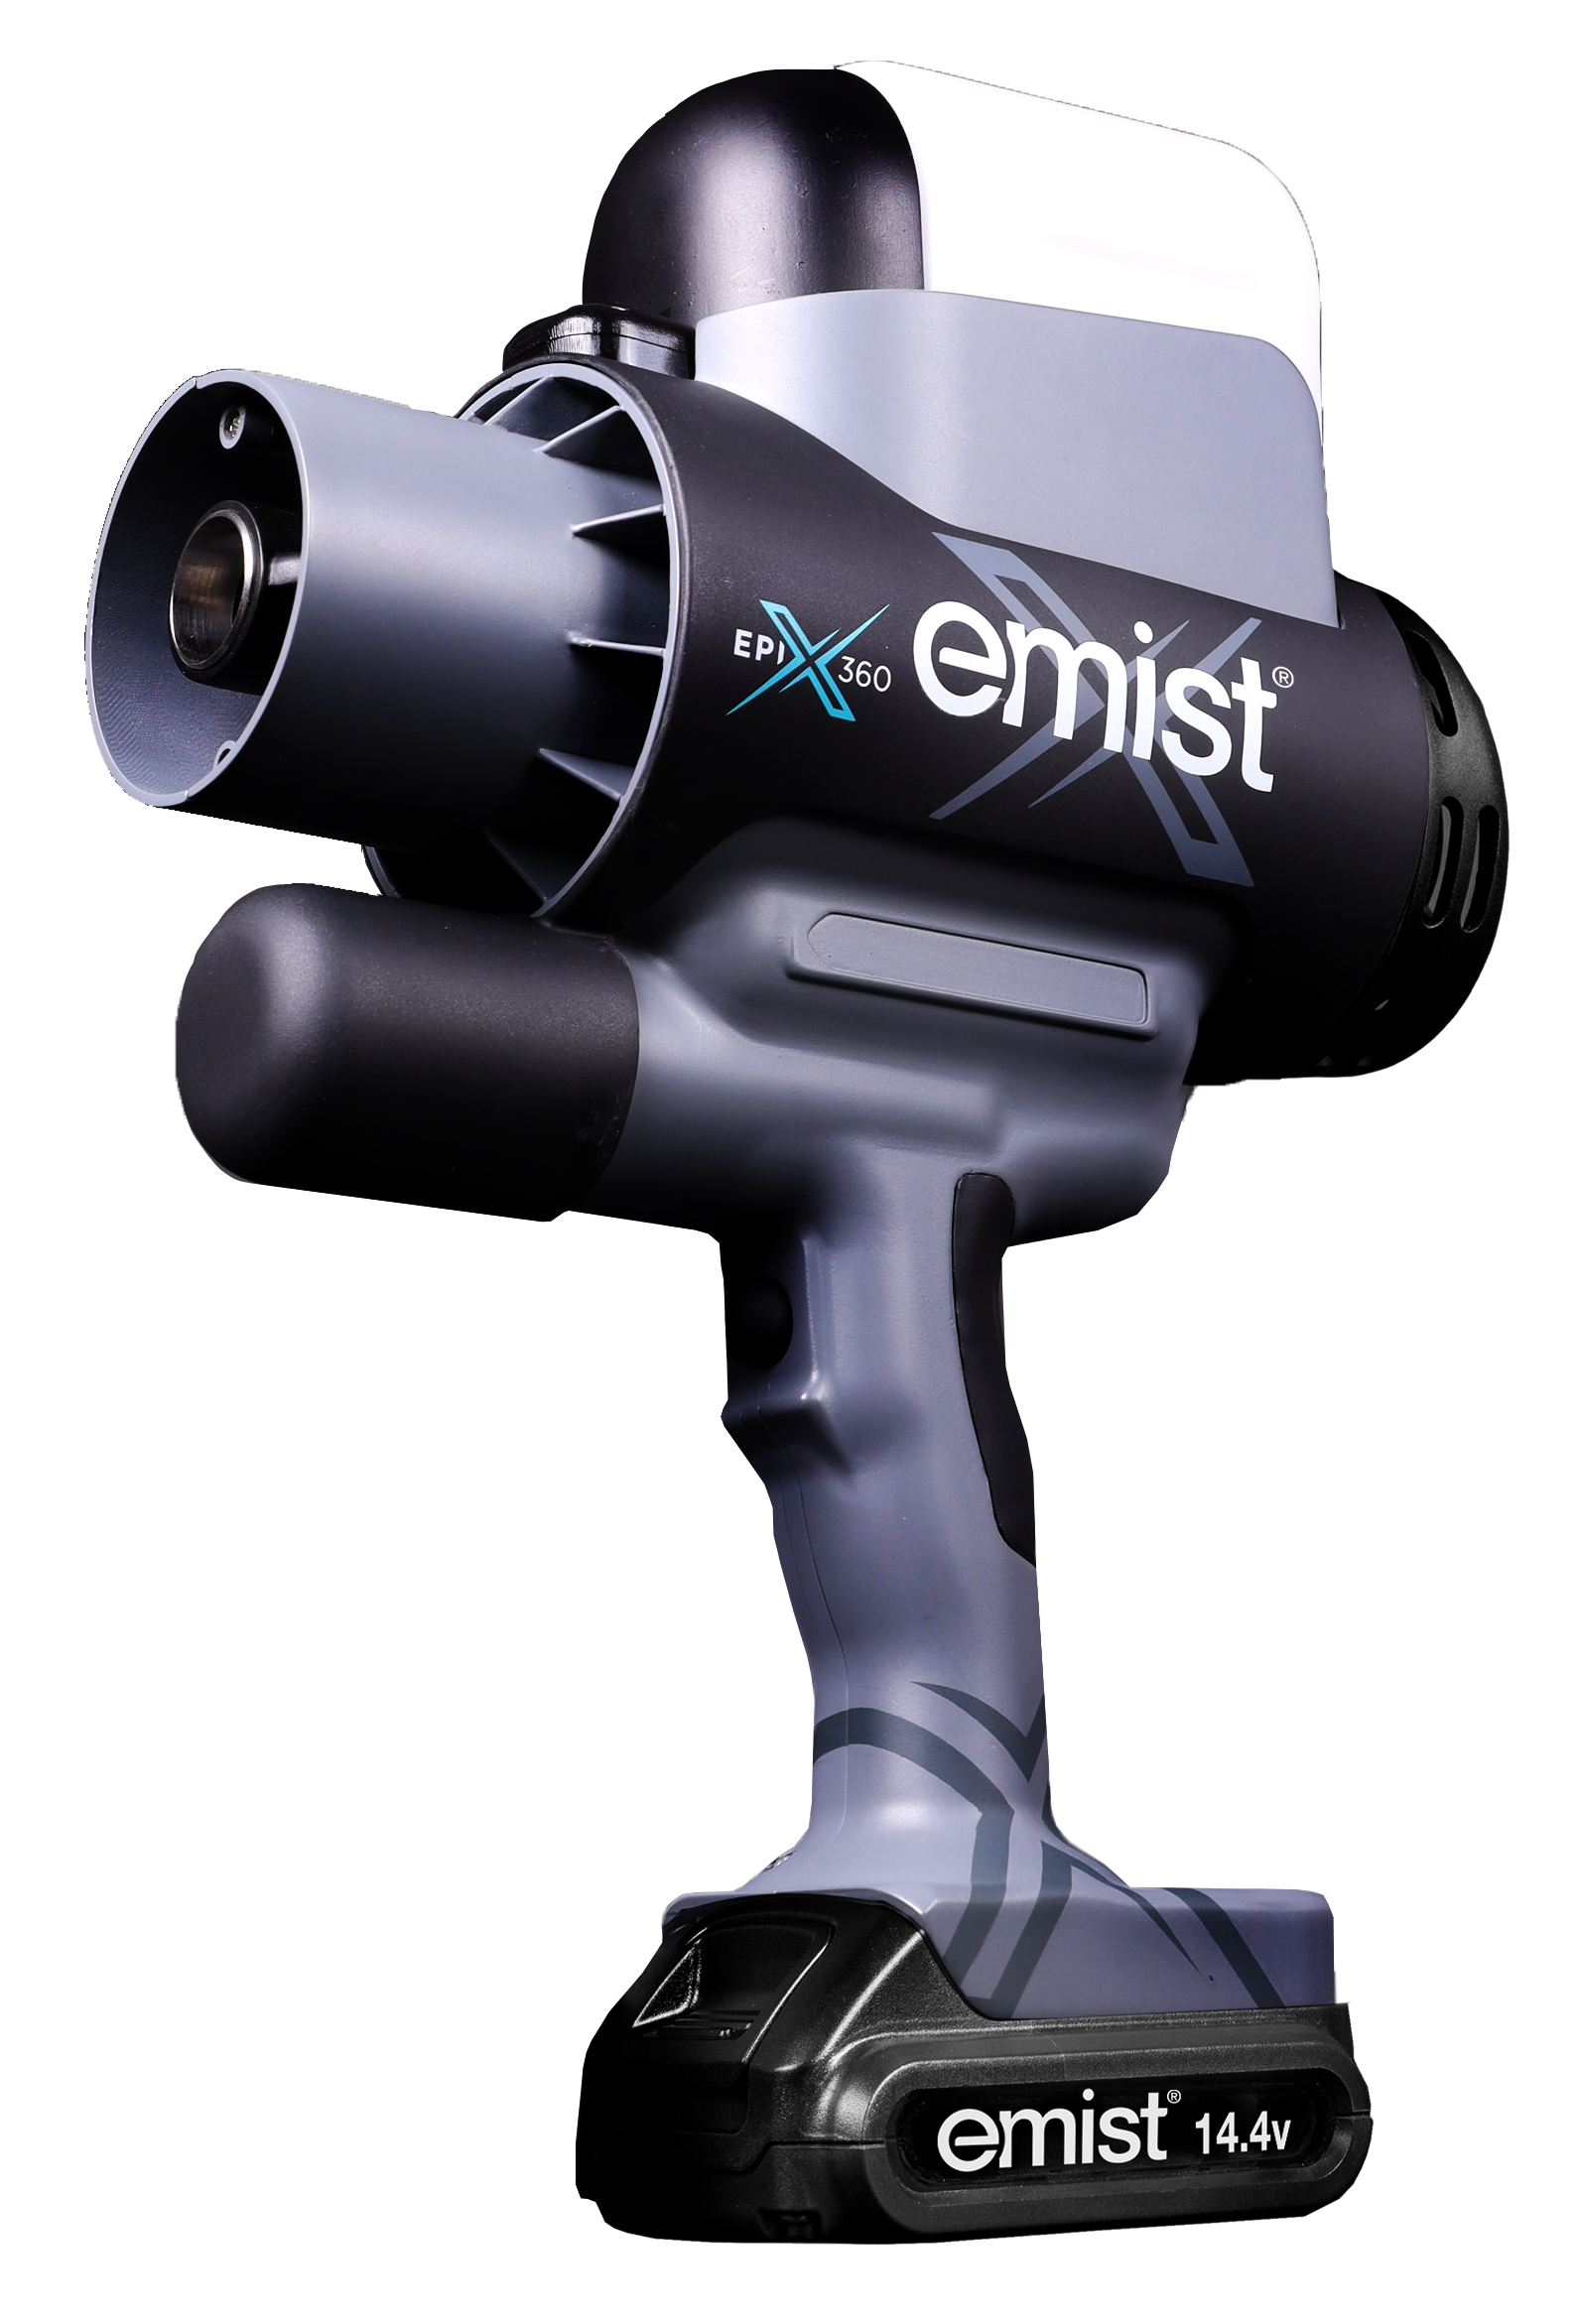 EMist Cordless Handheld Electrostatic Disinfectant Sprayer, EPIX360